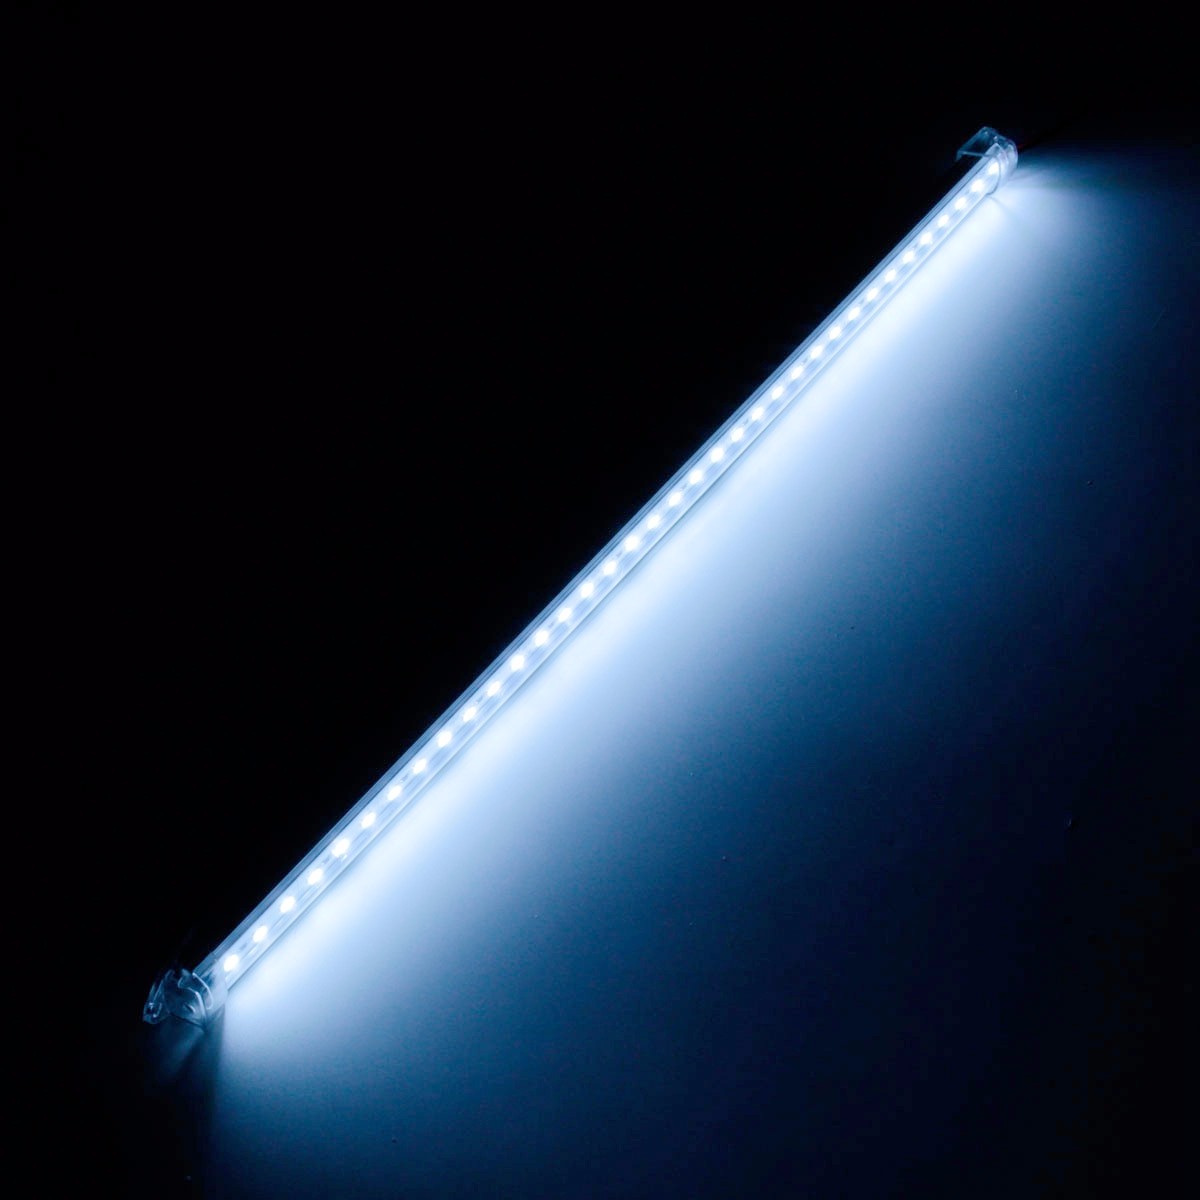 12V 50cm LED Strip Light Bar 5630 SMD Interior Lamp For Car Van Caravan Boat LWB Rear Lights